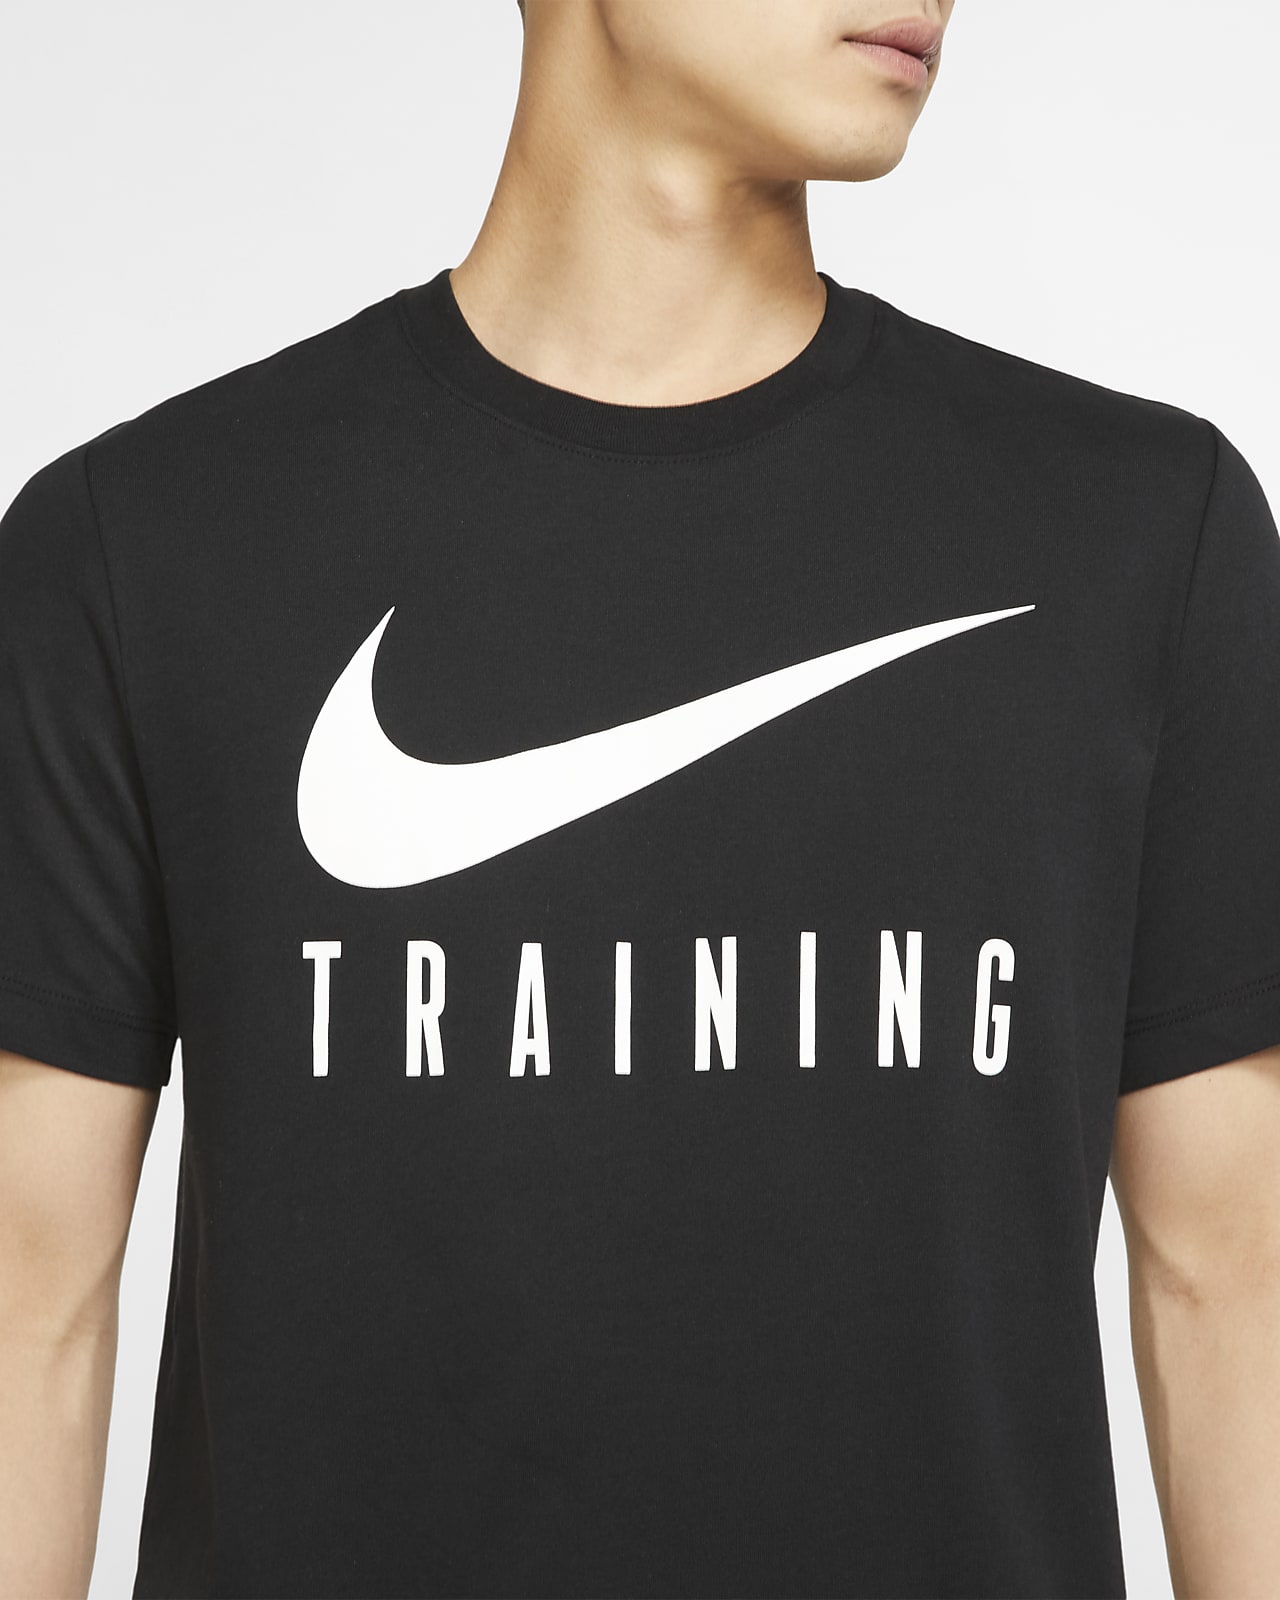 nike training t shirt mens